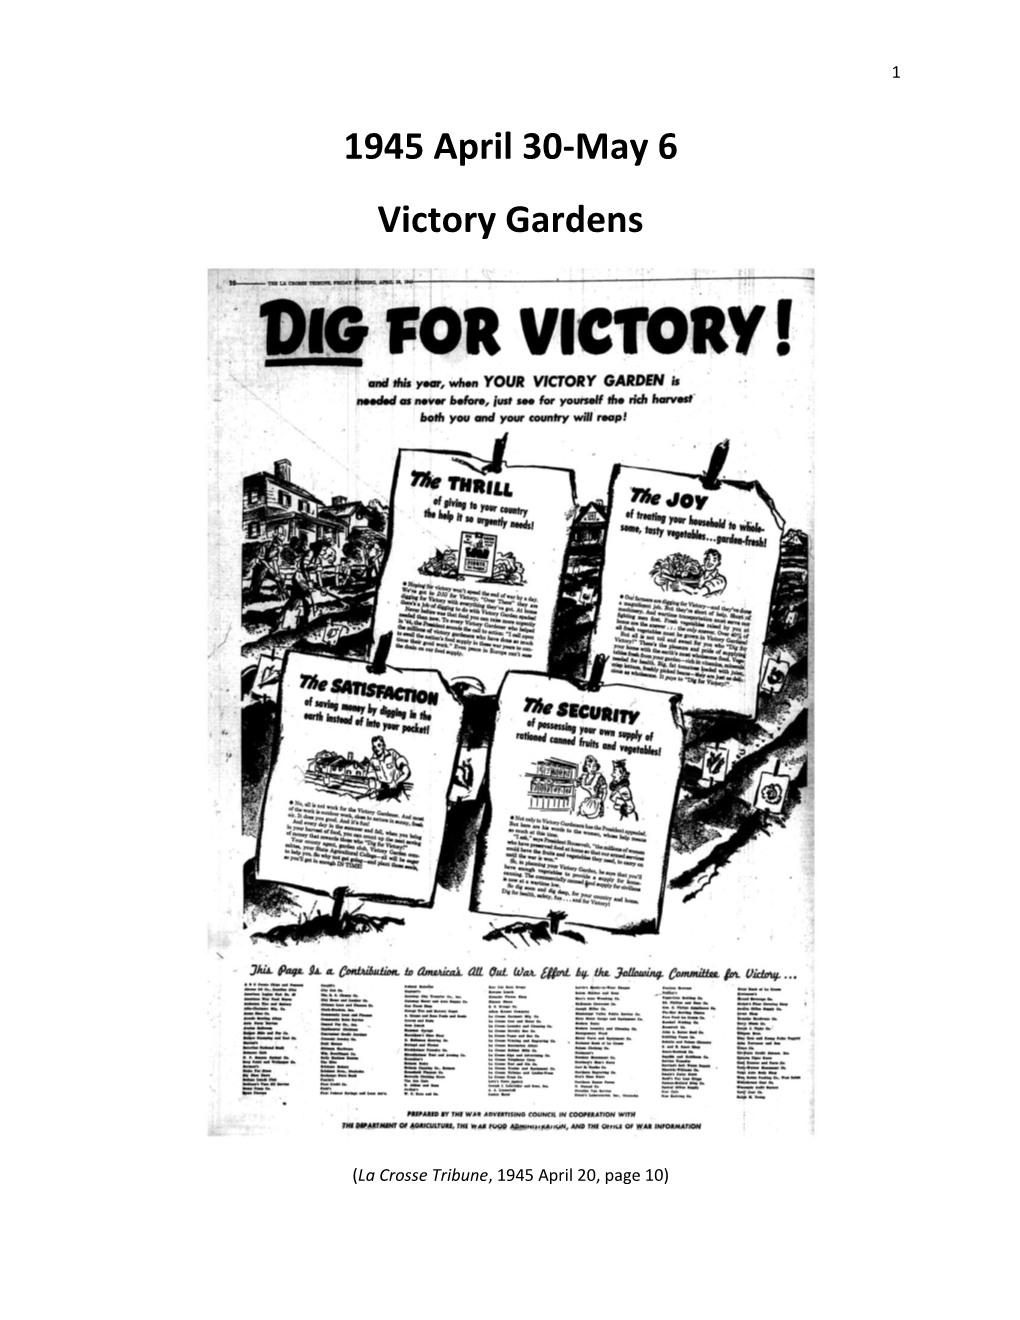 1945 April 30-May 6 Victory Gardens